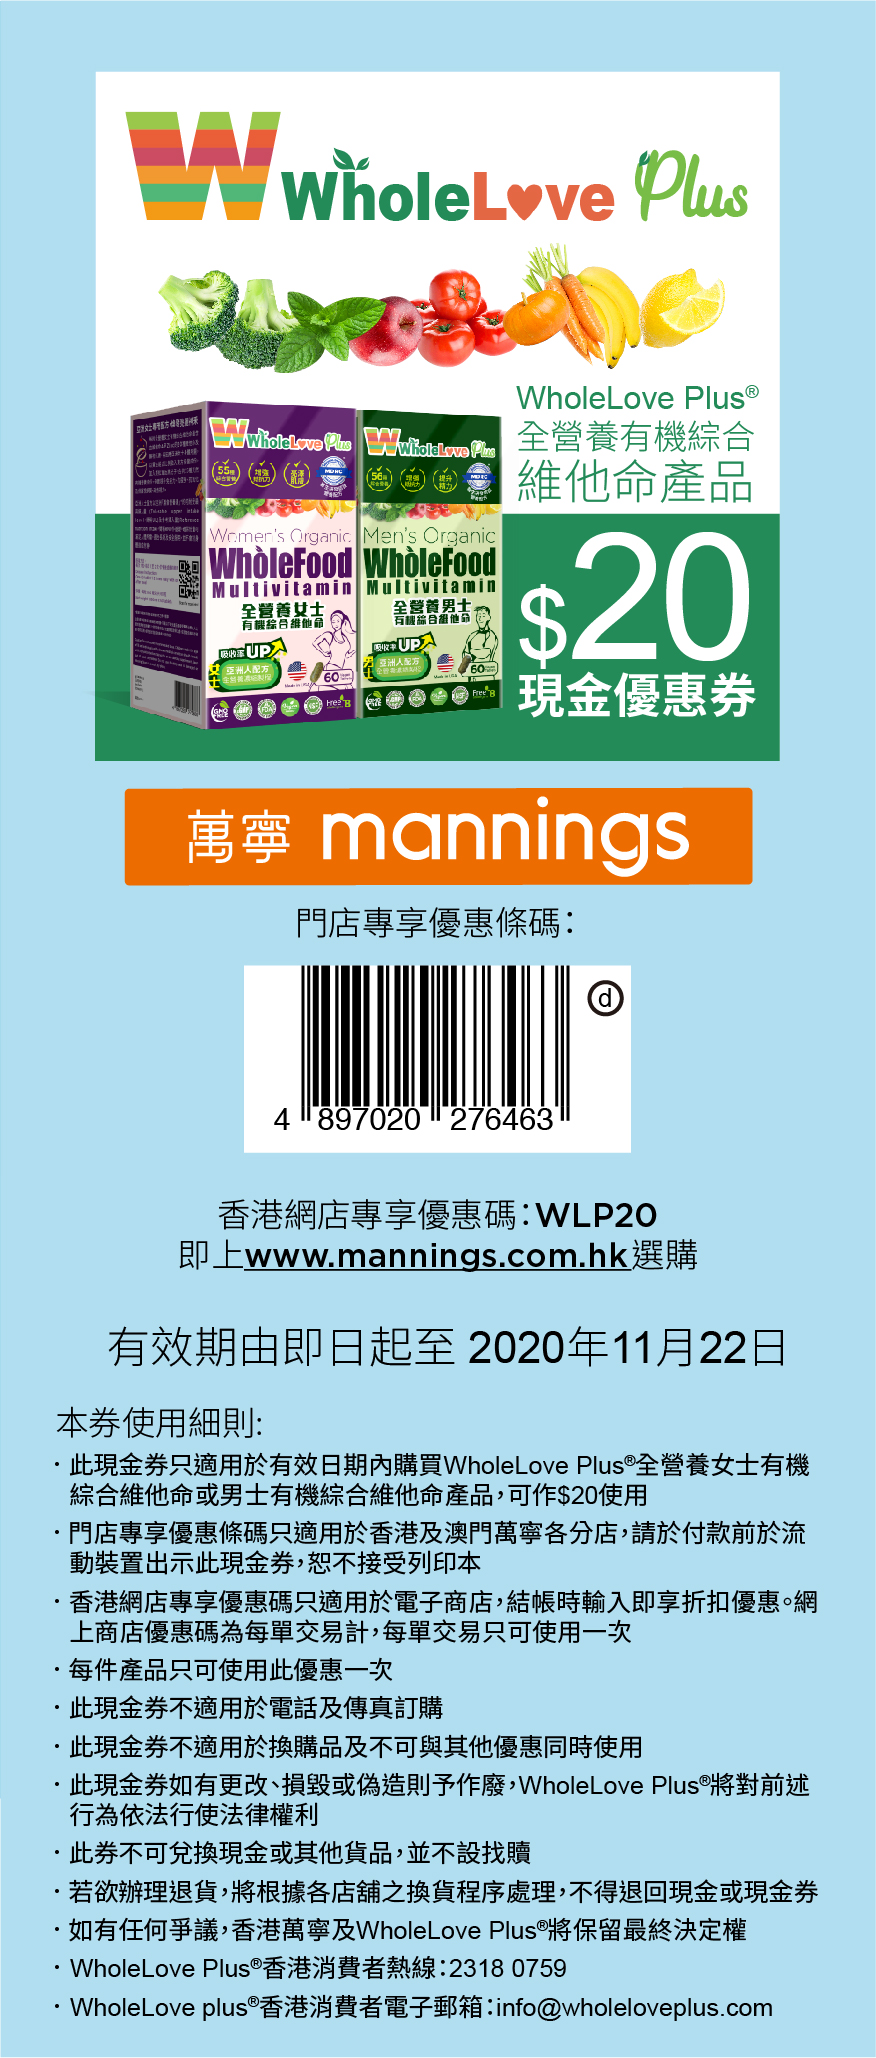 mannings WL Digital Coupon2020-10-01